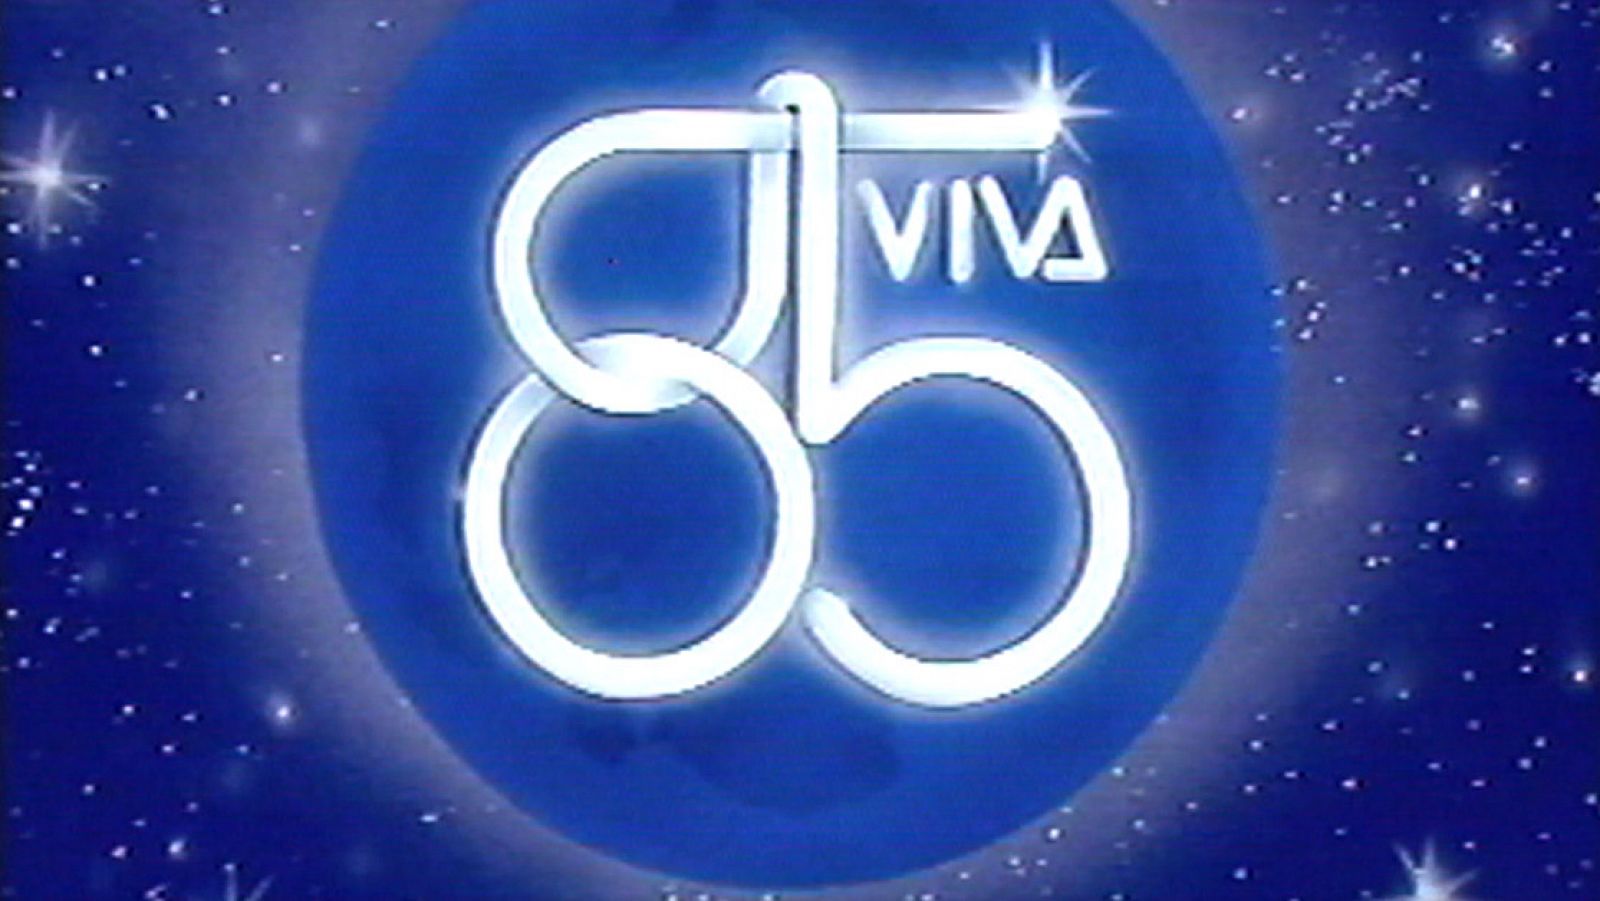 Música en el Archivo de RTVE: Viva 85 | RTVE Play